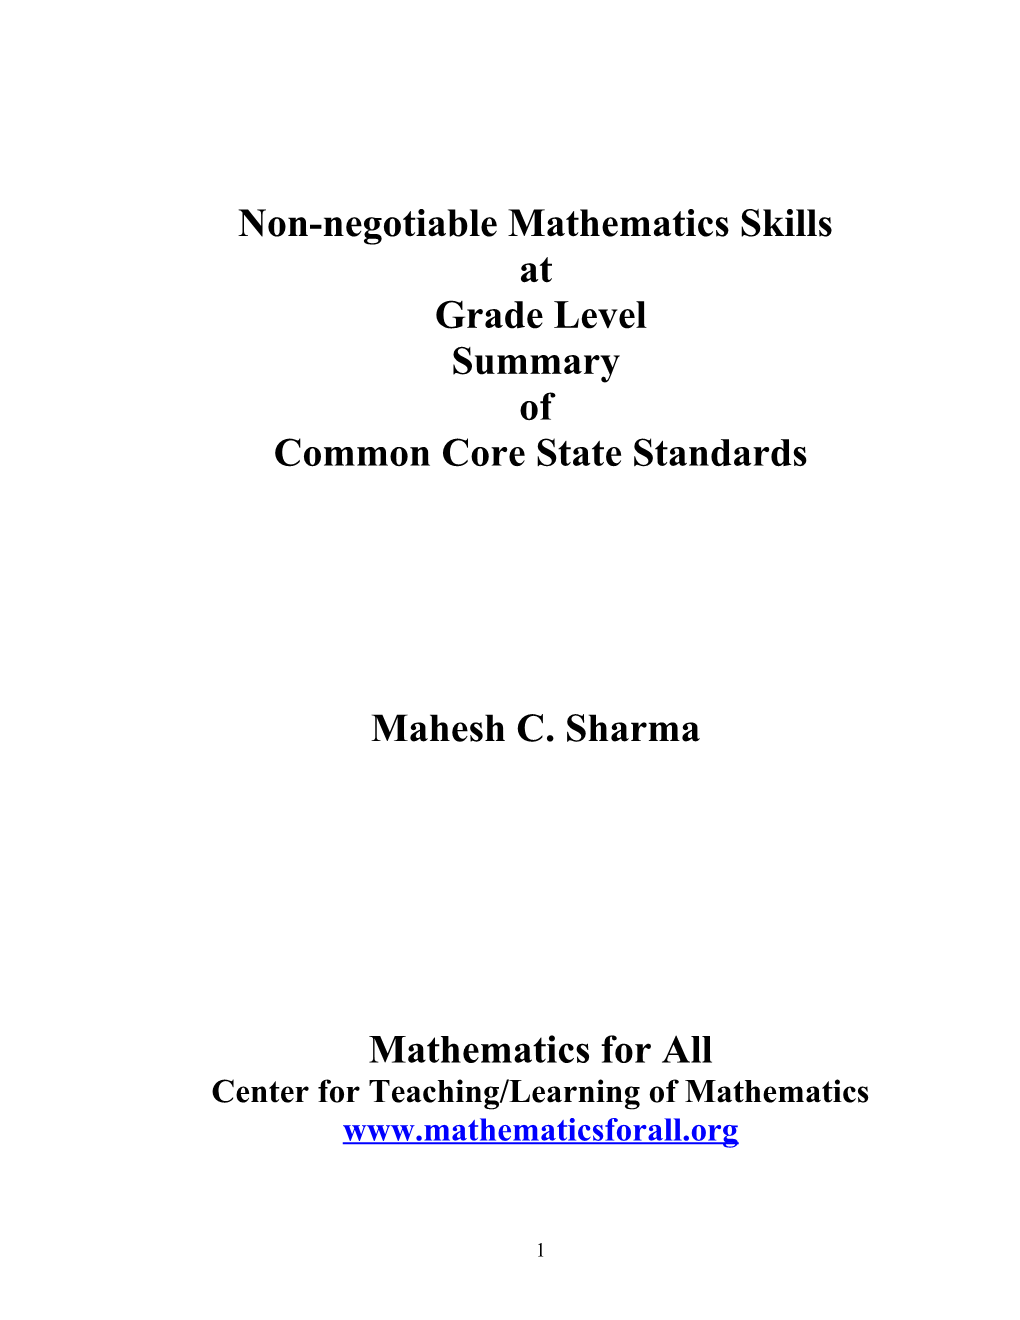 Non-Negotiable Mathematics Skills